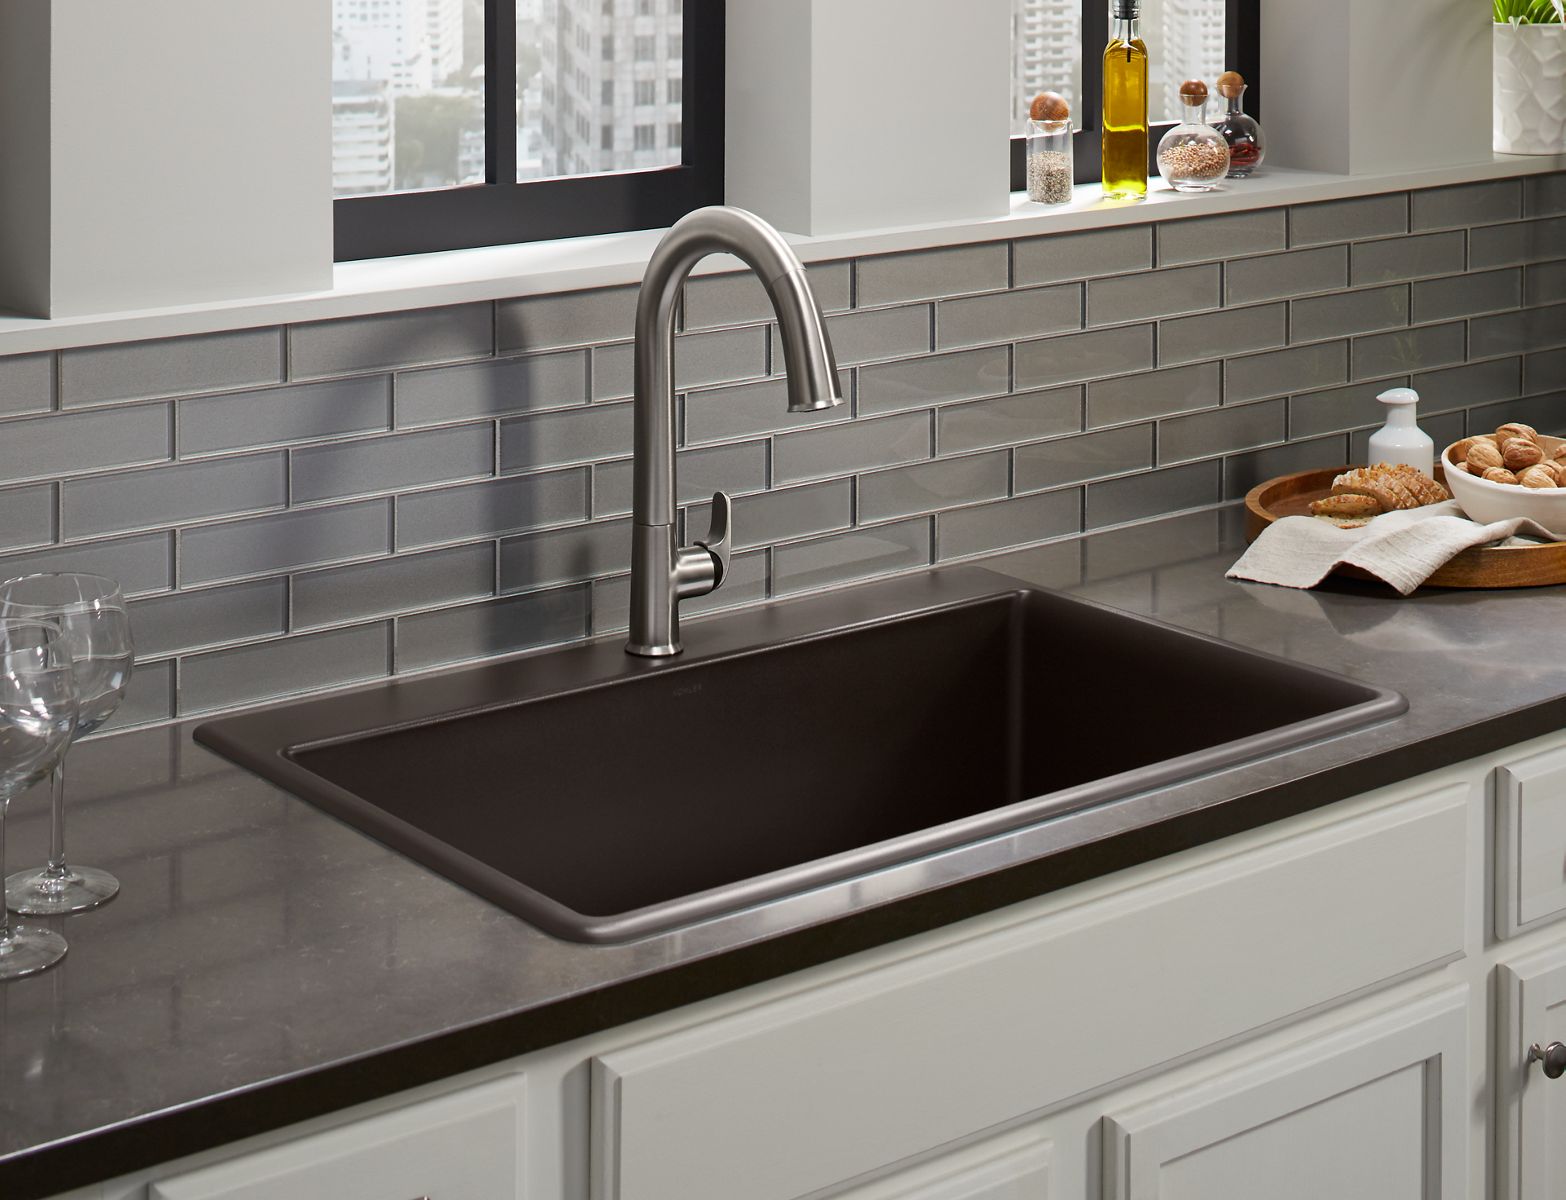 The 7 Best Kitchen Sink Materials For Your Renovation Bob Vila